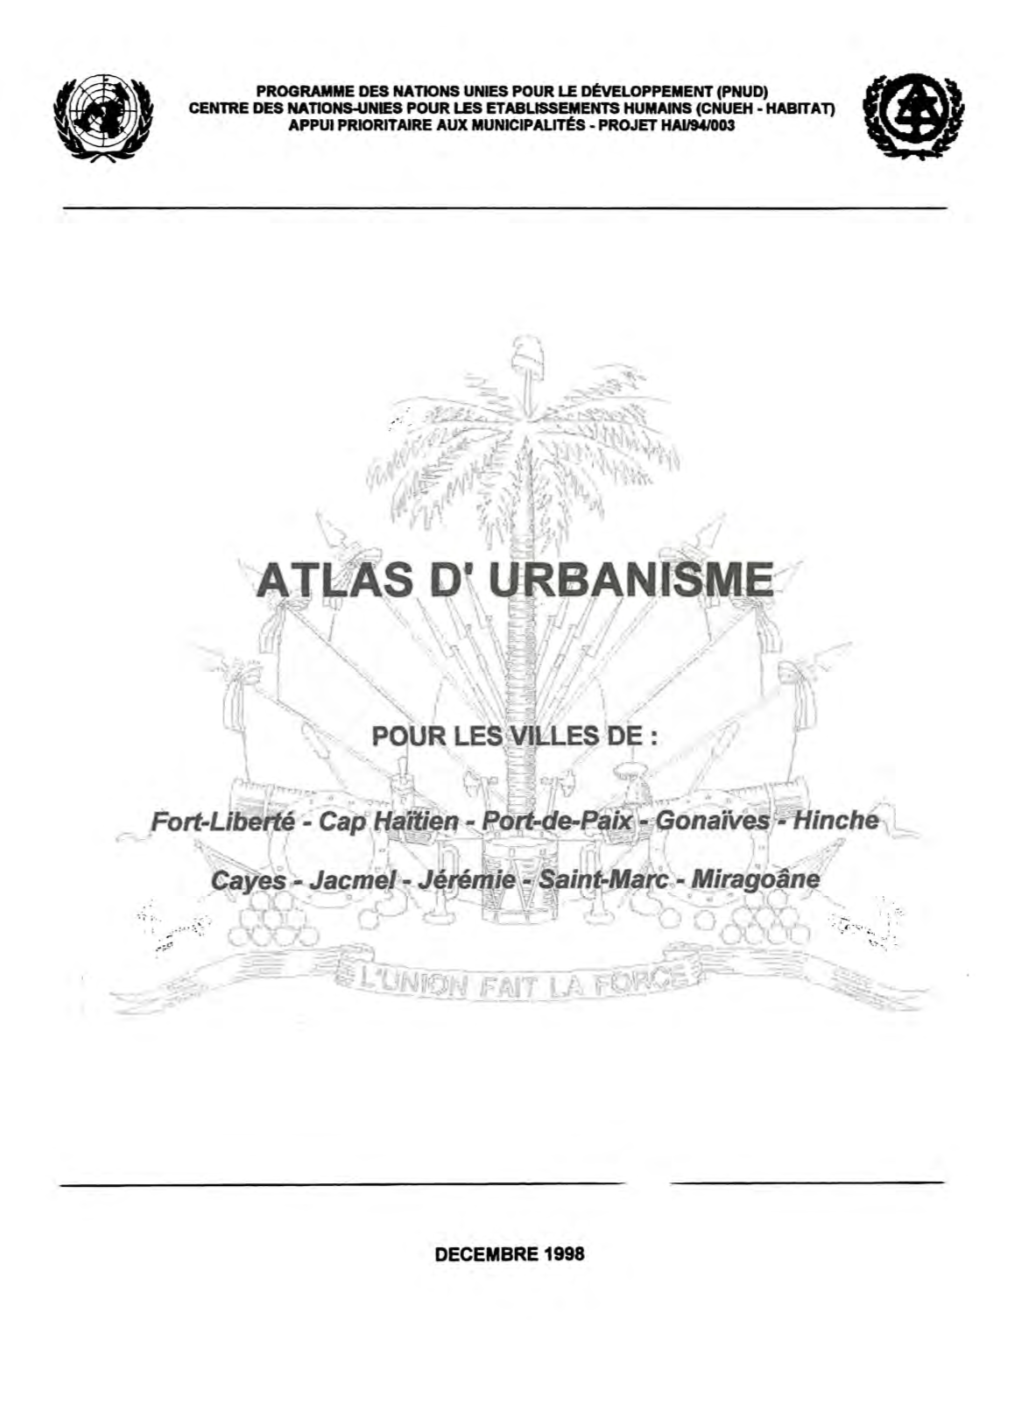 Decembre 1998 Atlas D'urbanisme Des Villes Principales D'haïti